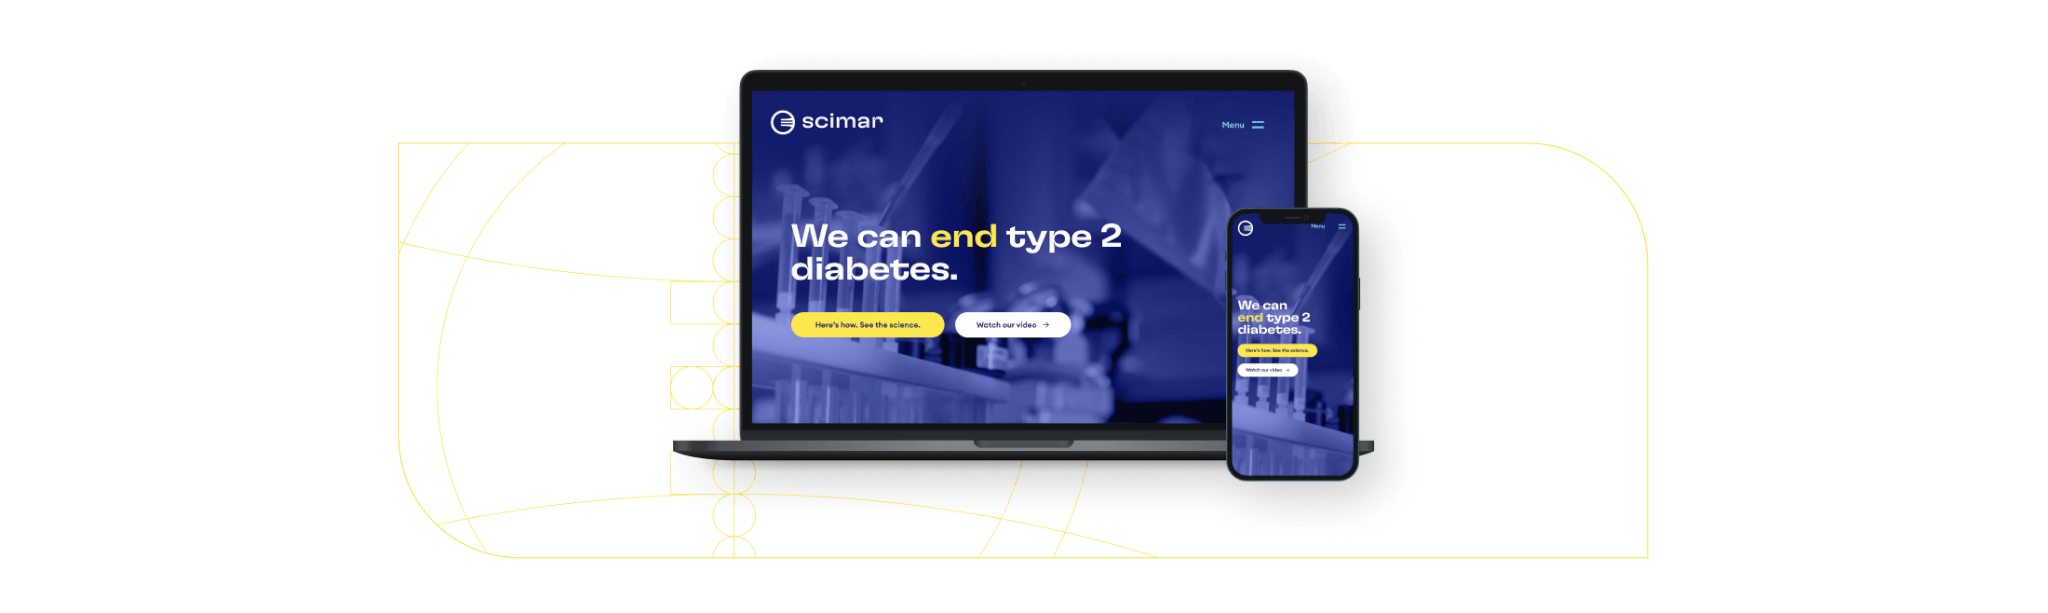 Scimar home screen mobile and desktop mockup